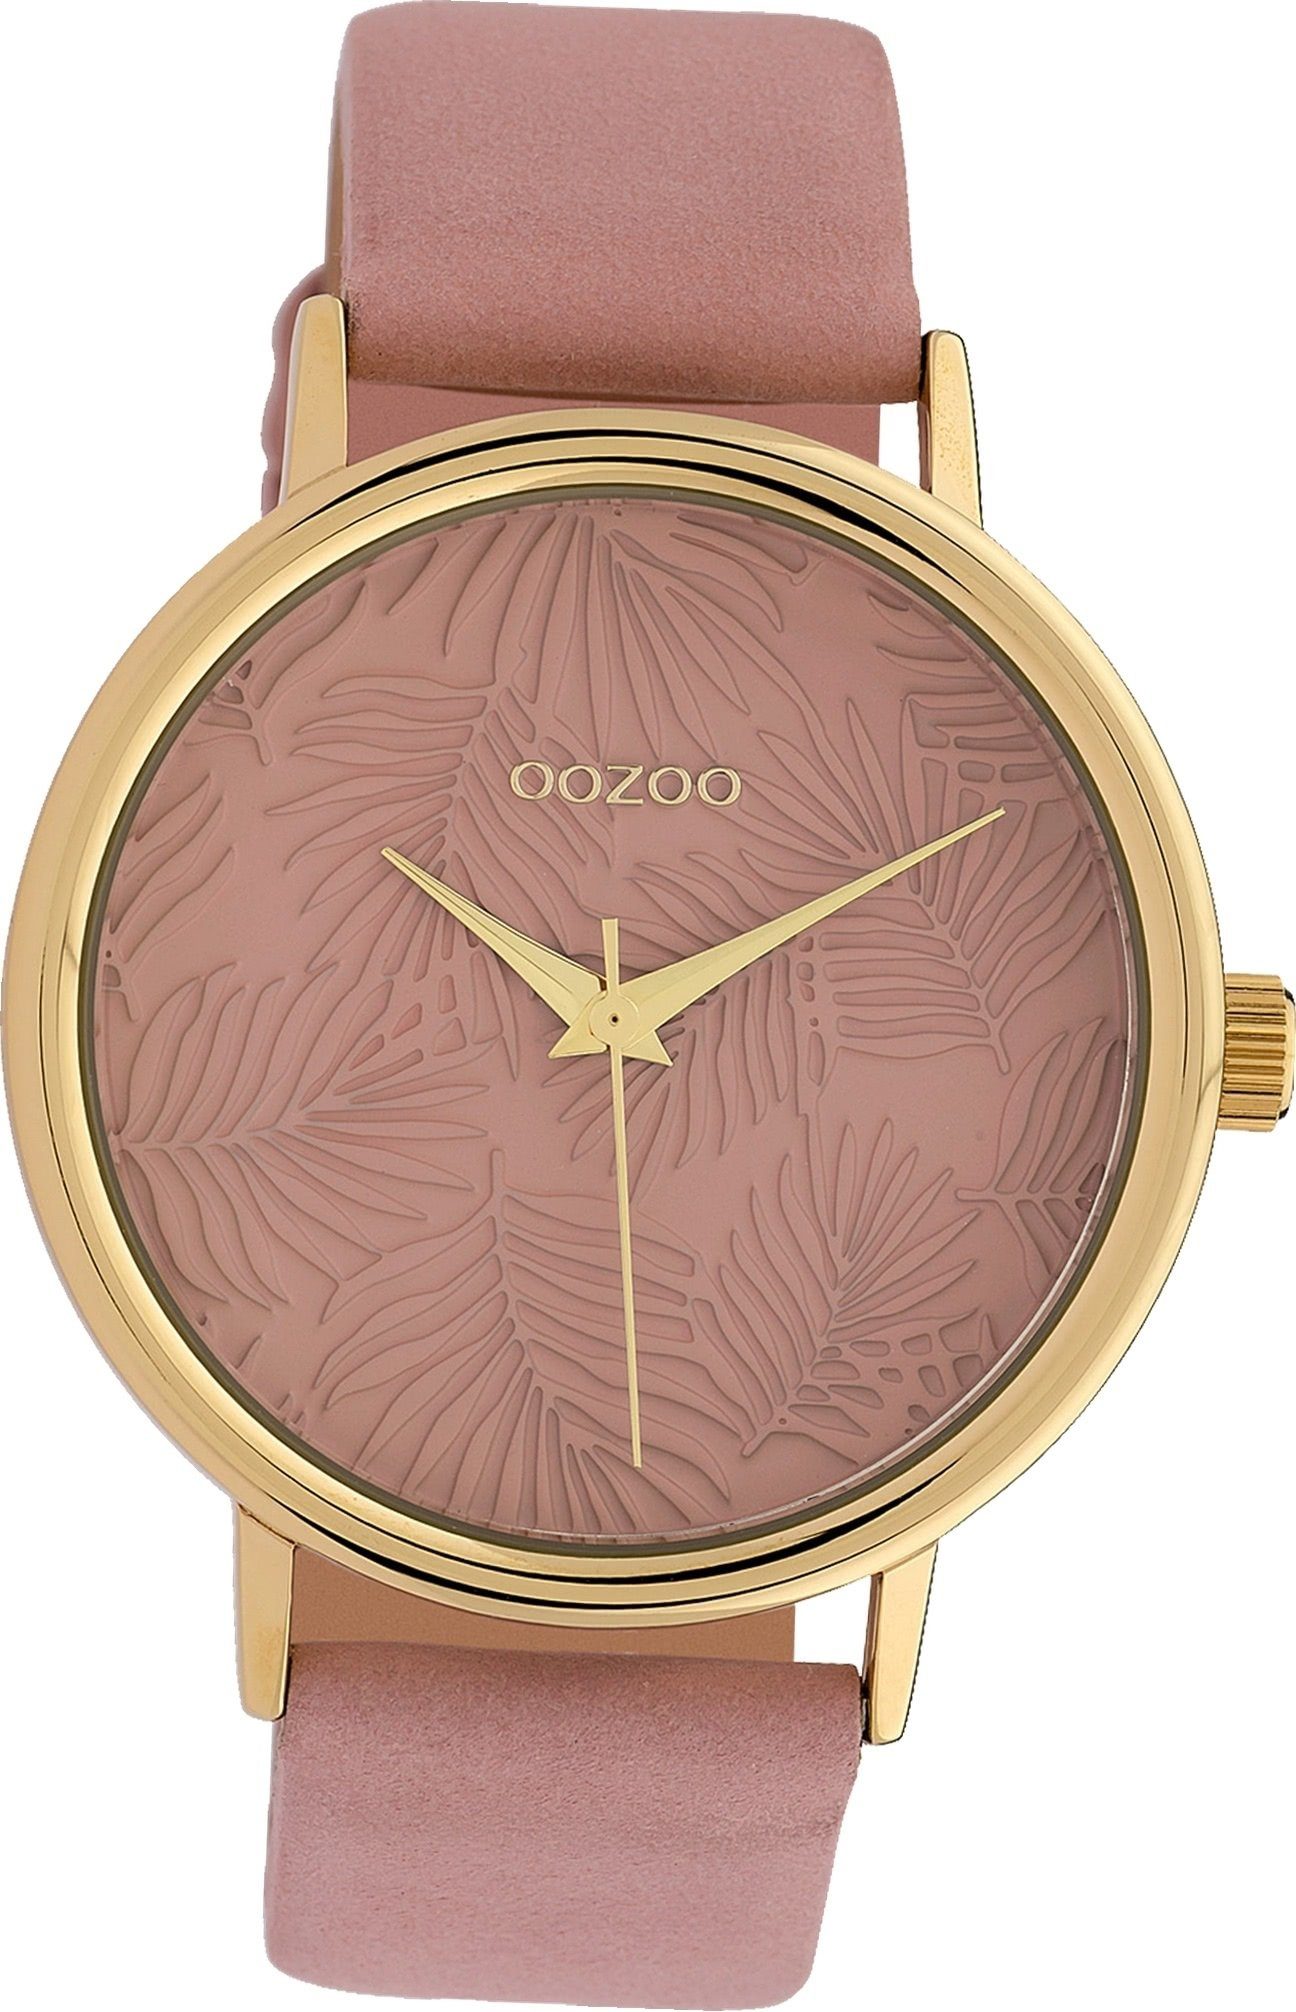 OOZOO Quarzuhr Oozoo Leder Damen Uhr C10081 Analog, Damenuhr Lederarmband altrosa, rundes Gehäuse, groß (ca. 42mm) | Quarzuhren